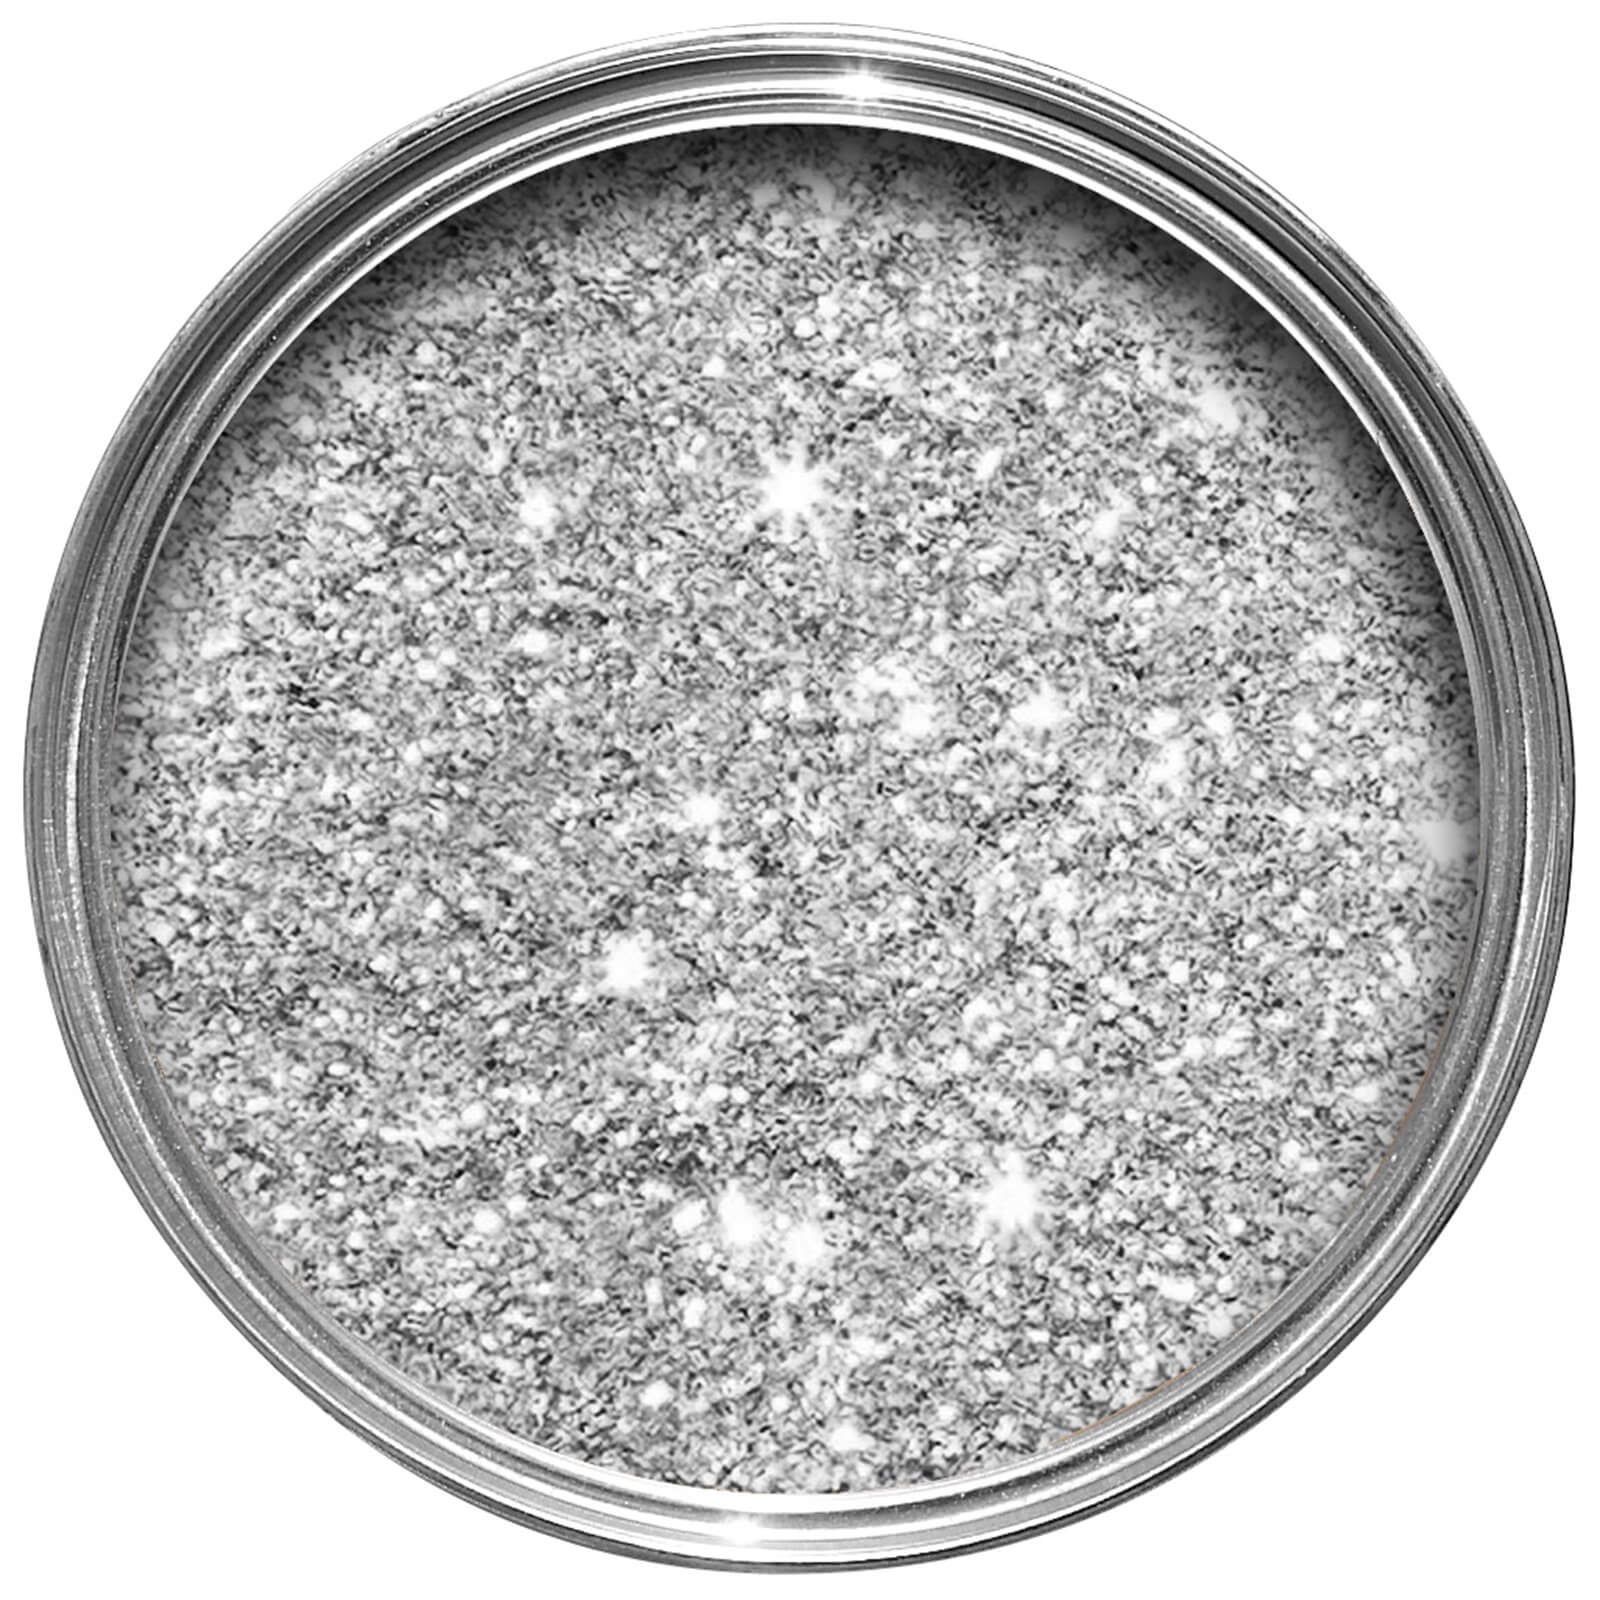 Rust-Oleum Super Sparkly Glitter Silver - 250ml